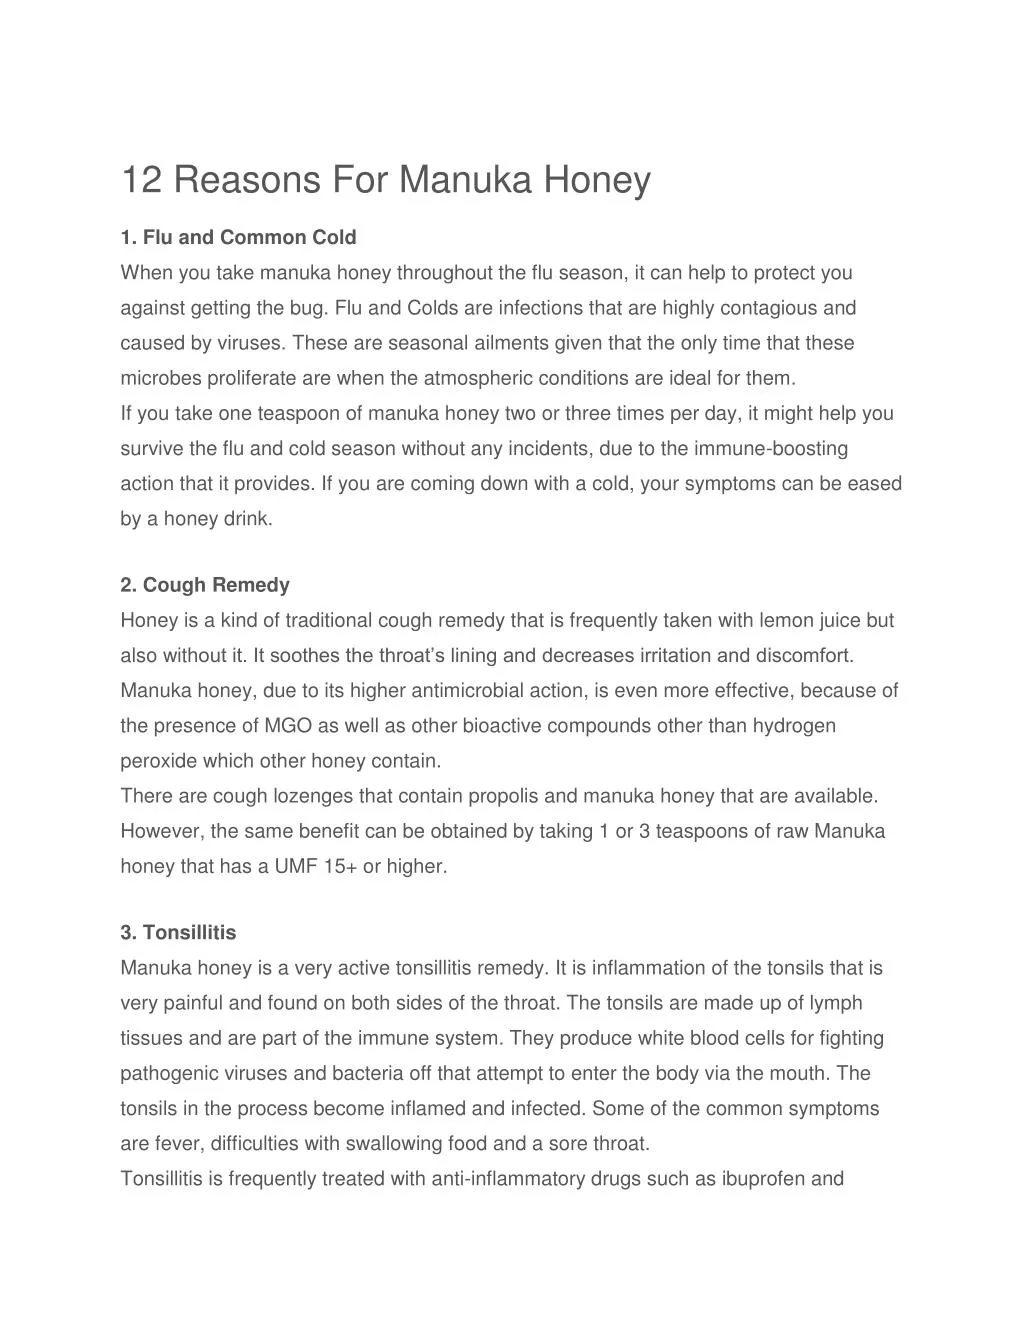 12 reasons for manuka honey